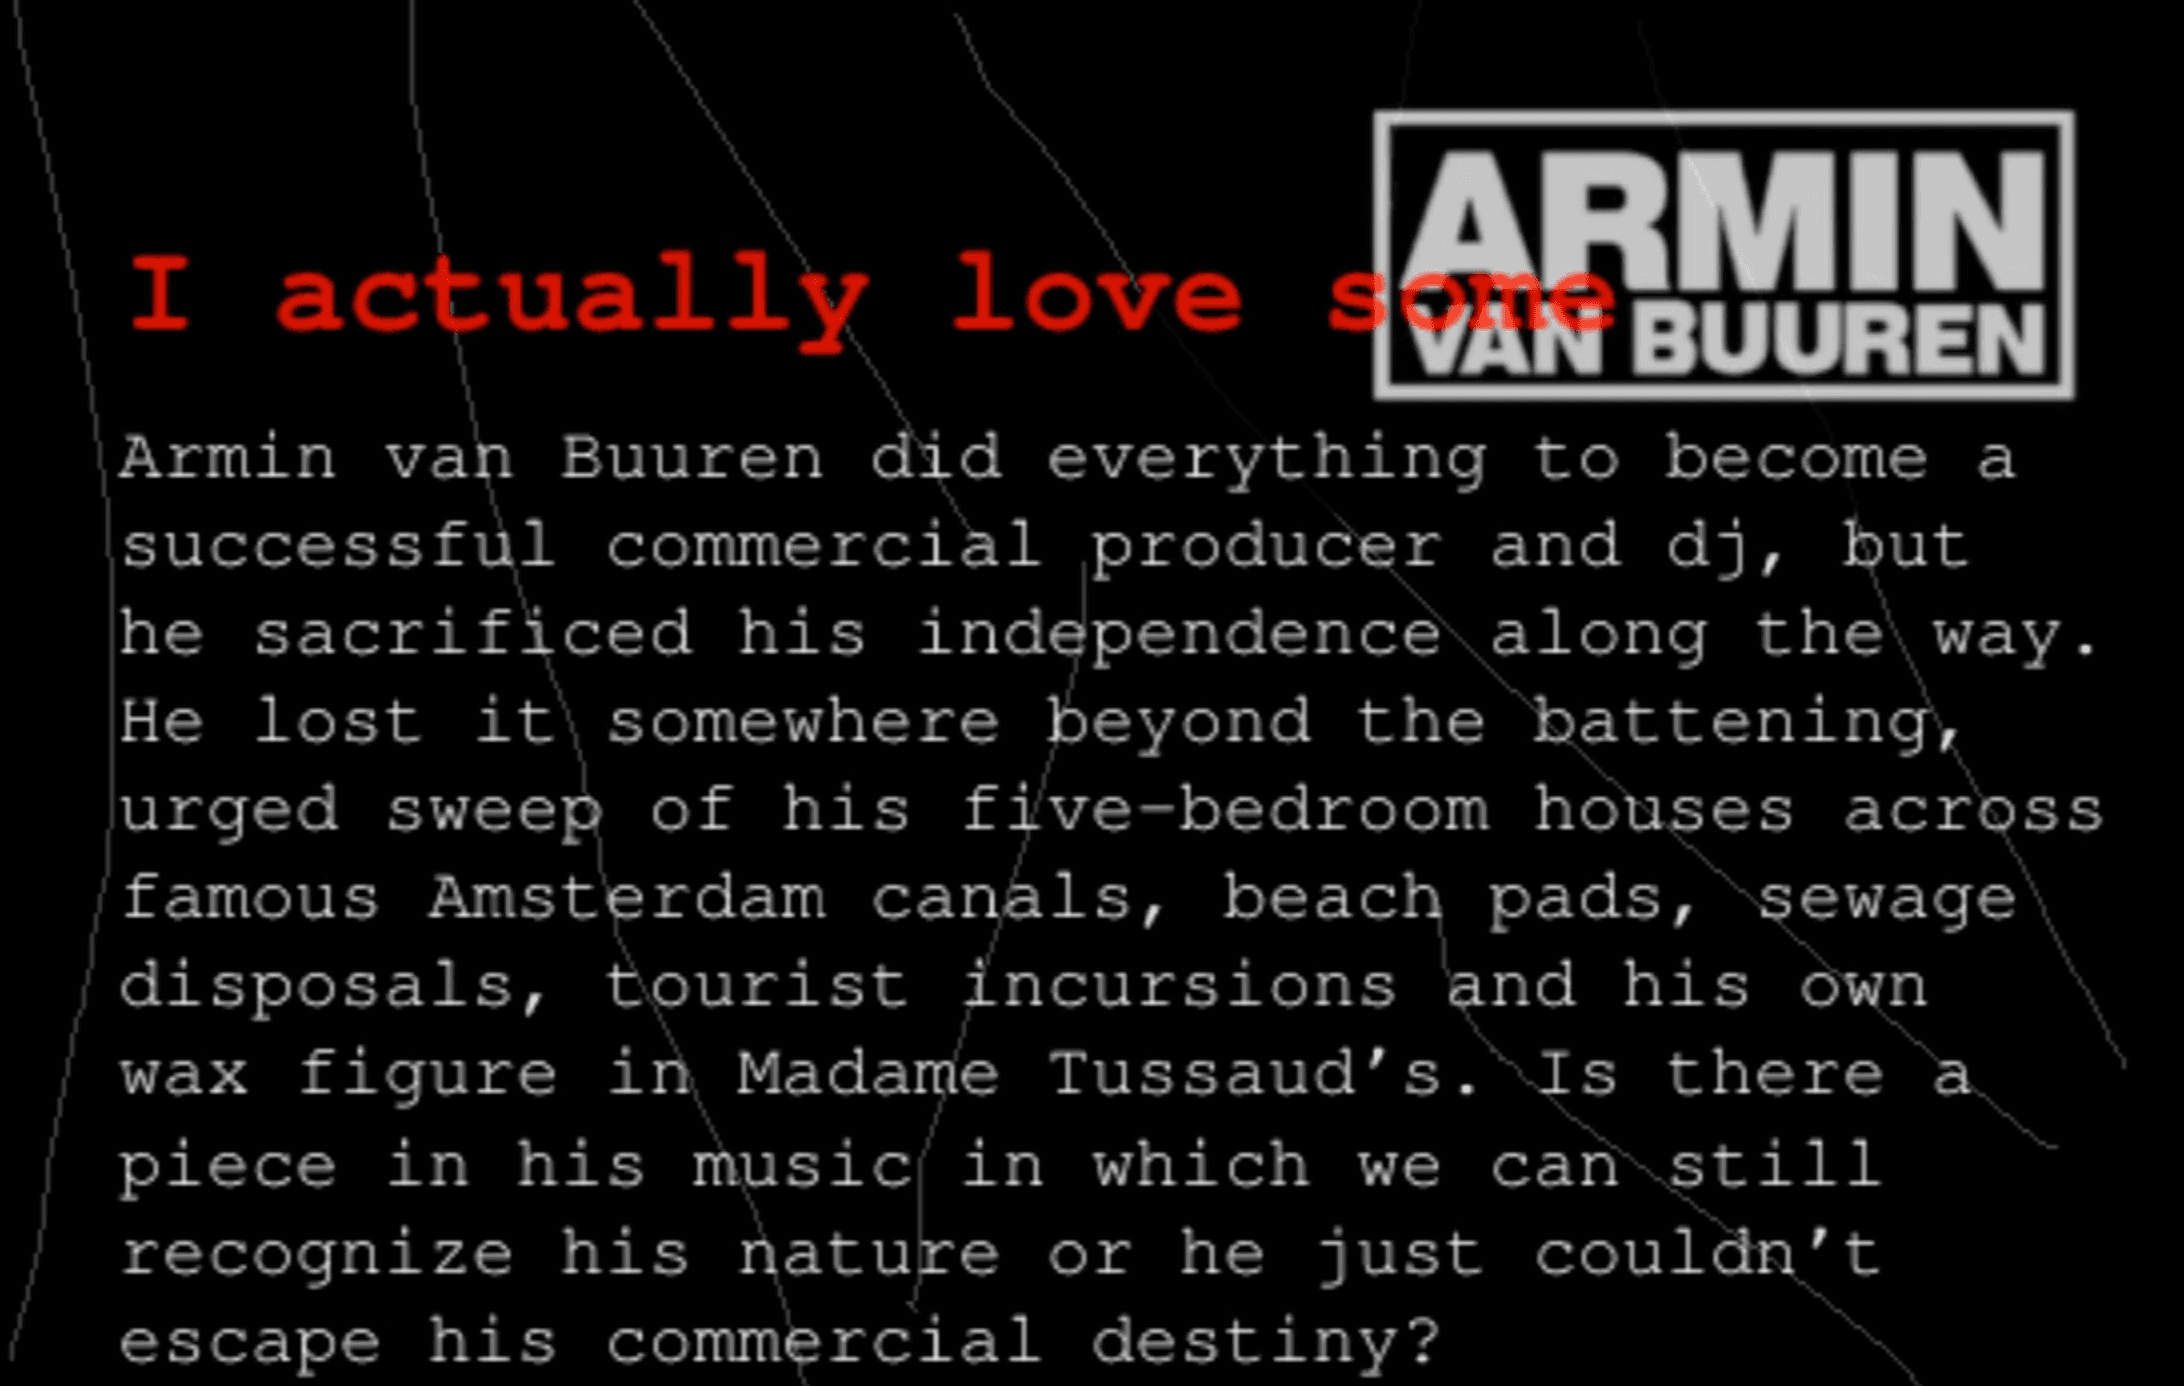 i actually love armin van buuren screen cover screen